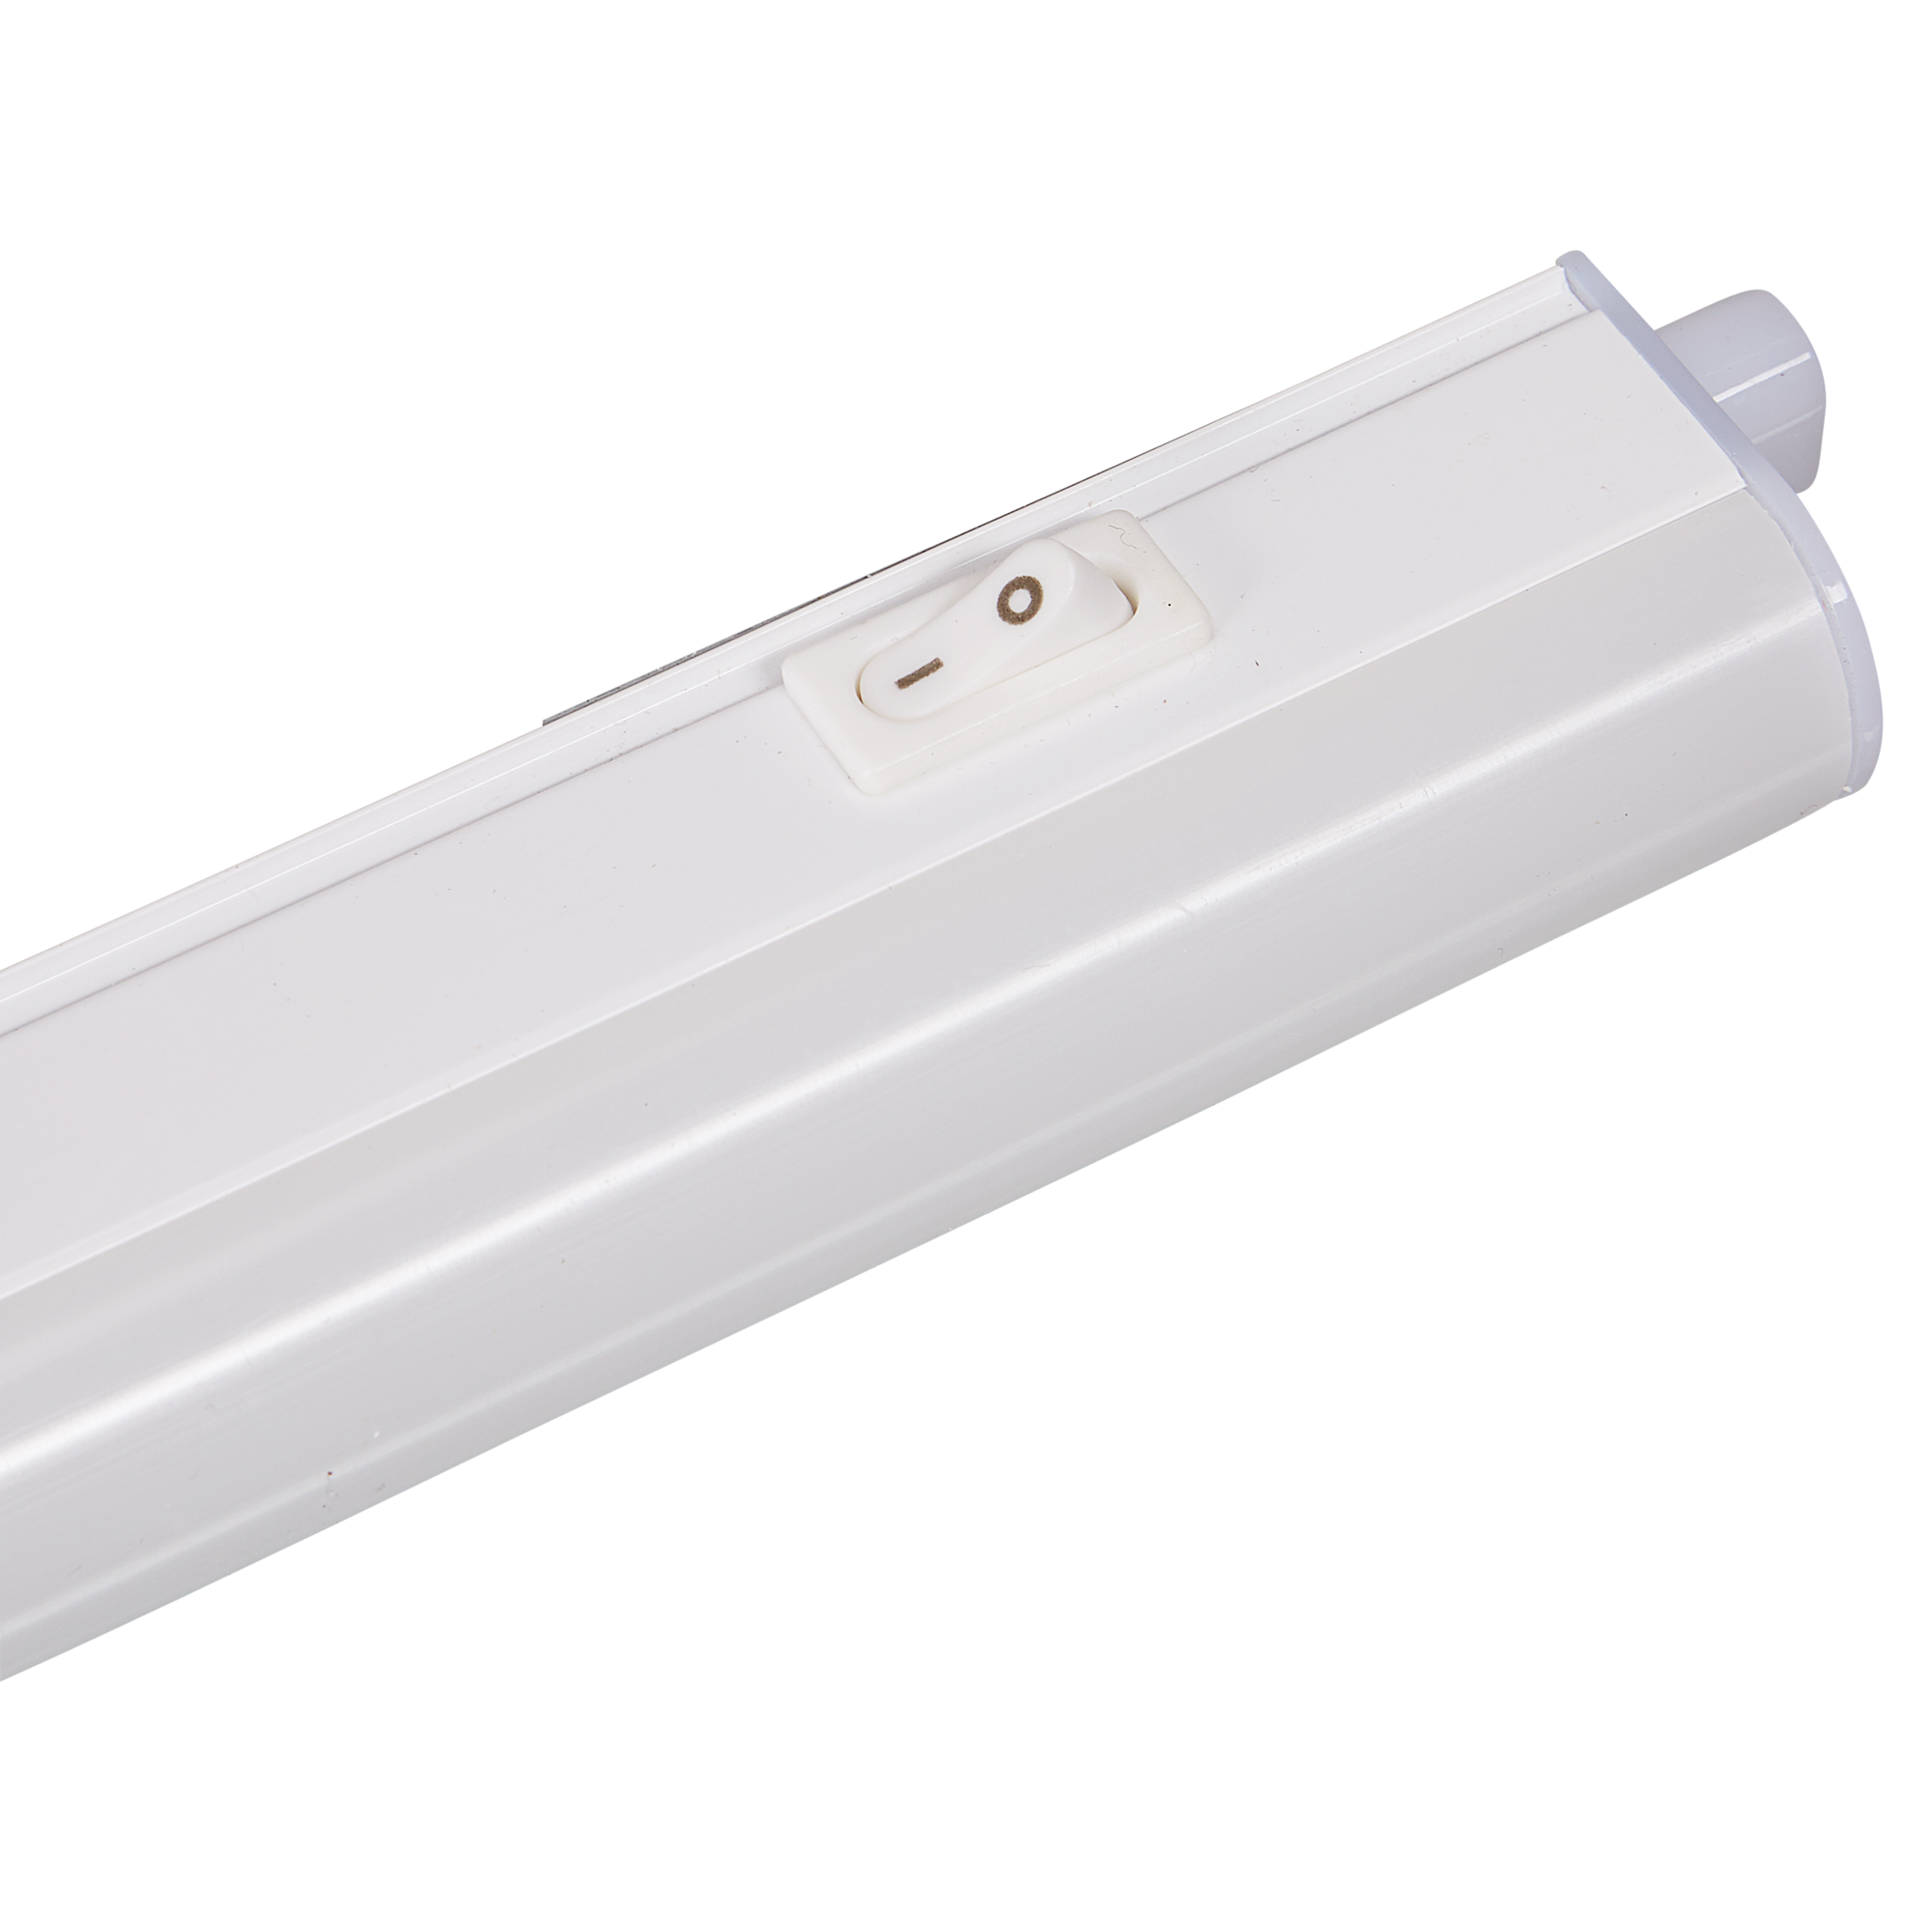 LED Unterbauleuchte weiß 4 W 31,3 x 2,2 x 3 cm + product picture